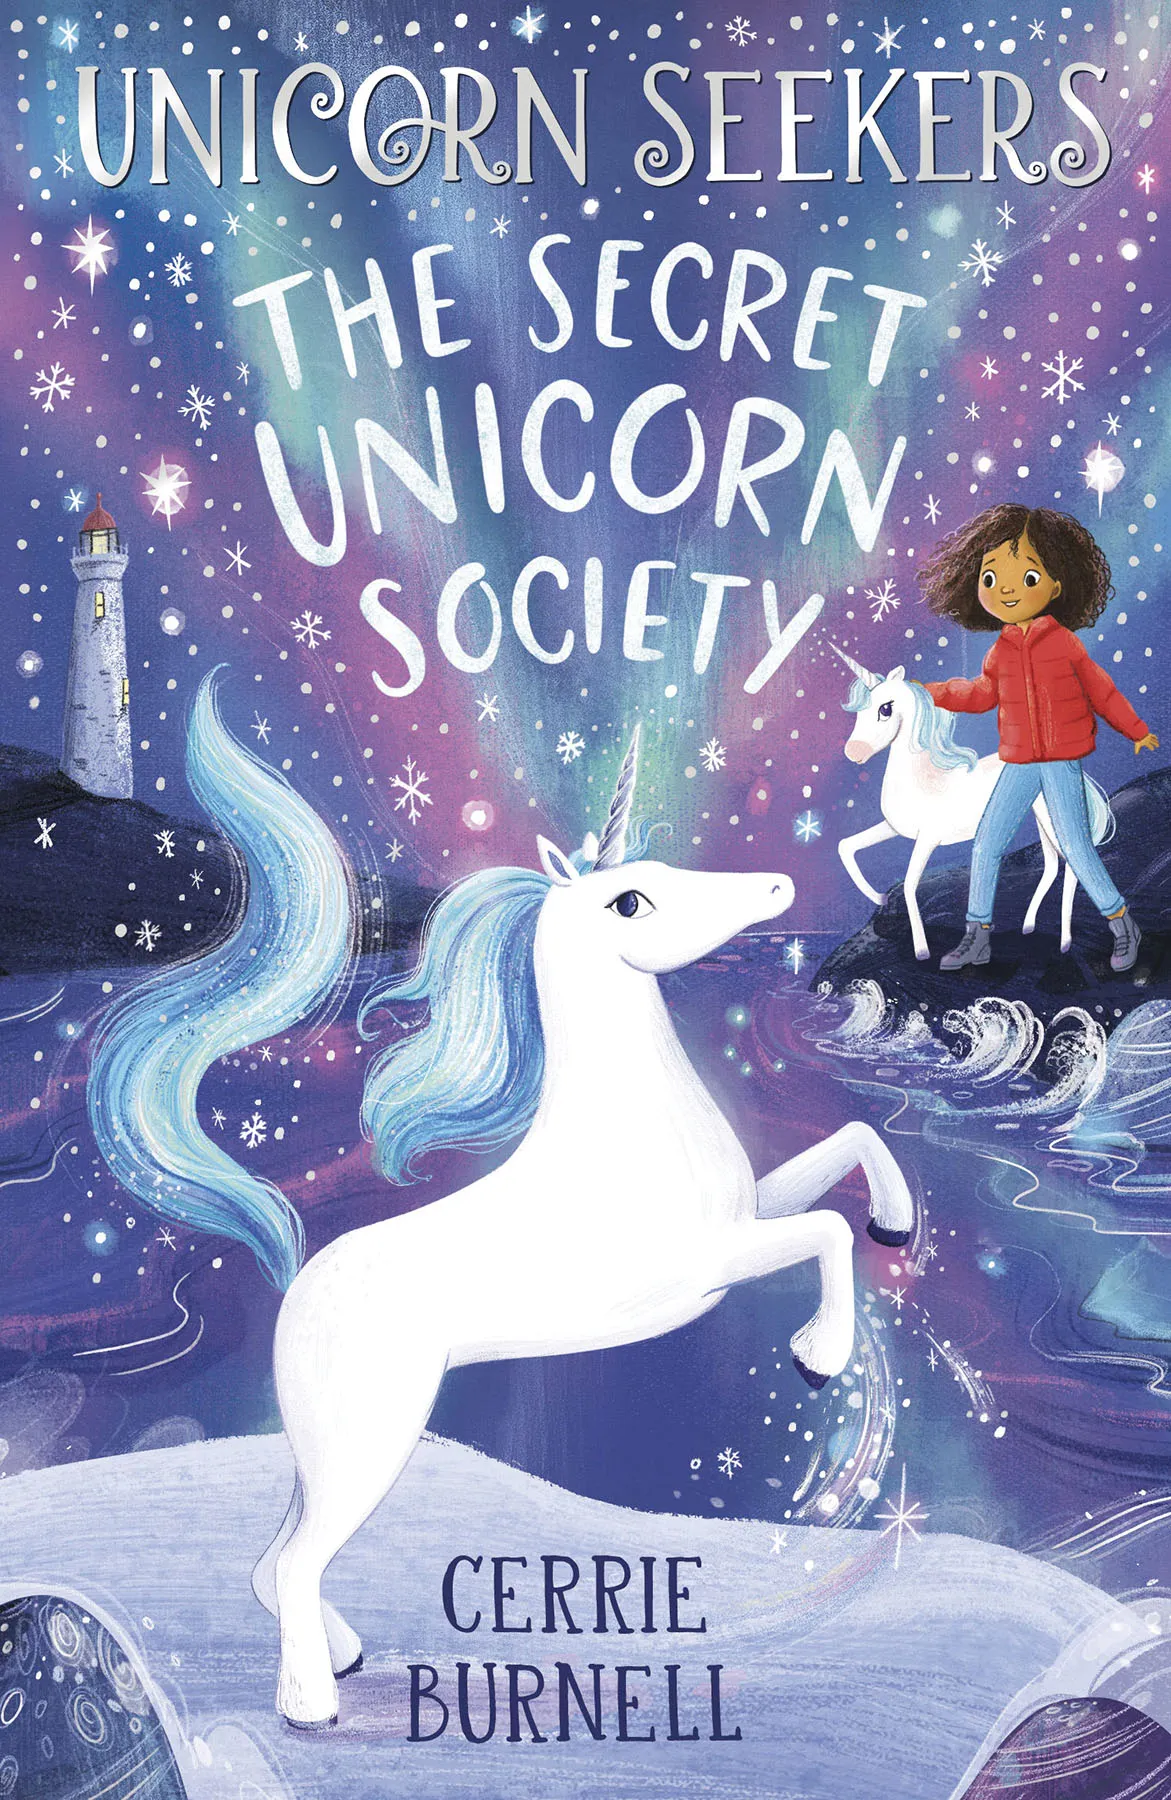 The Secret Unicorn Society (Unicorn Seekers #2)